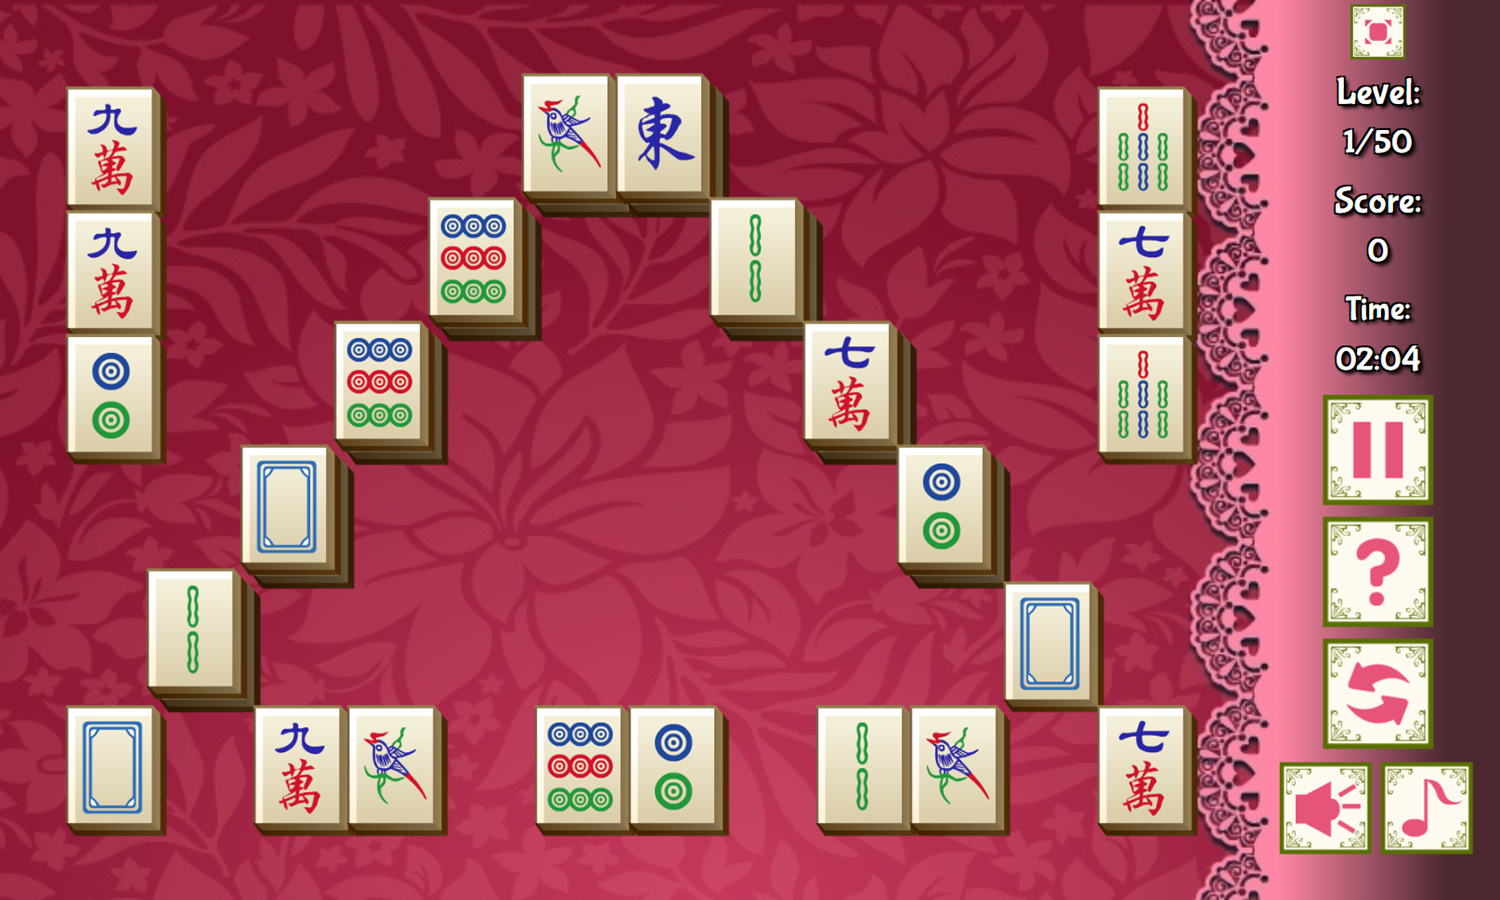 Triple Mahjong 2 Game Level Start Screenshot.